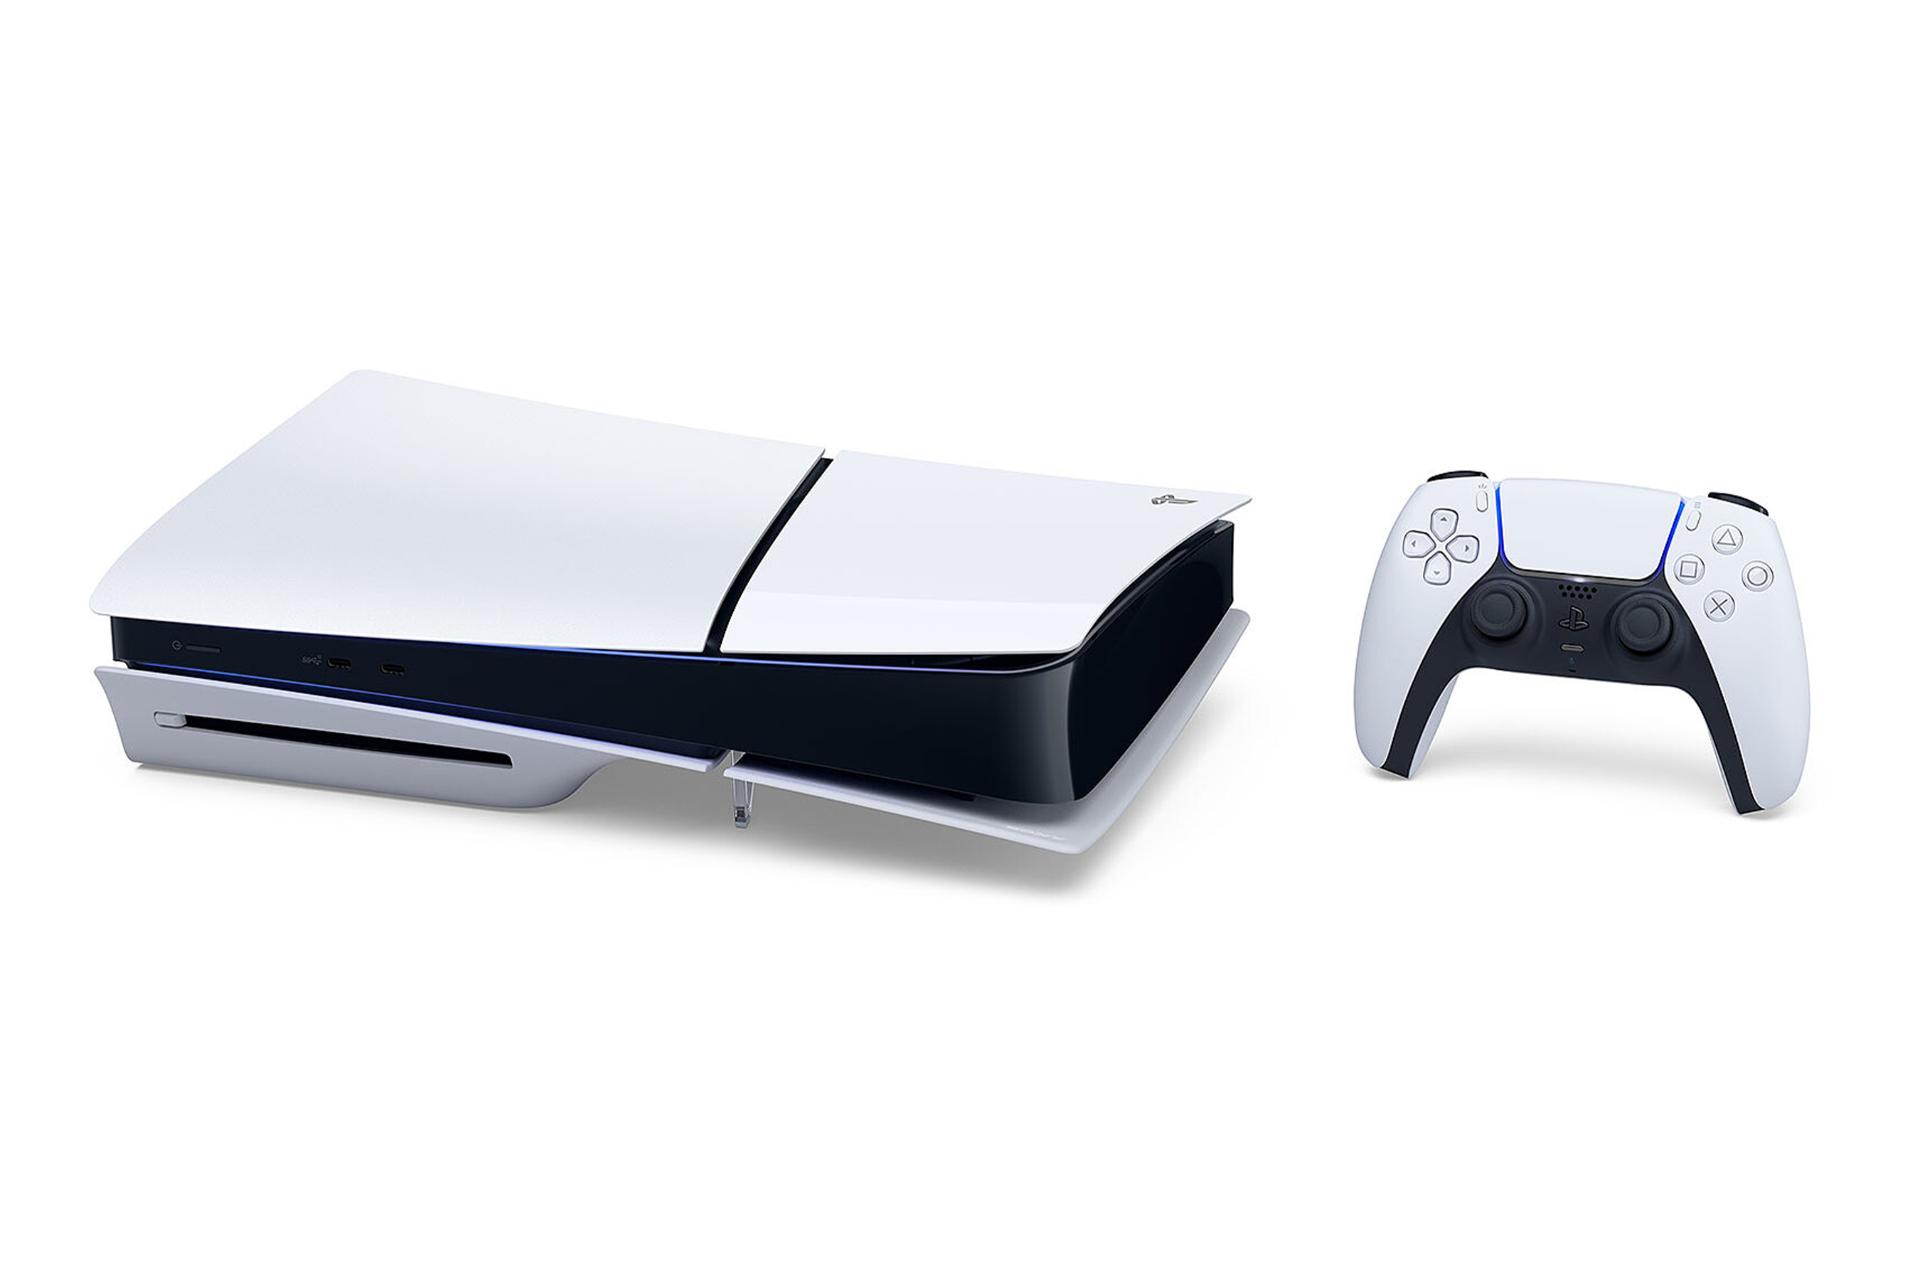 مرجع متخصصين ايران نماي افقي كنسول بازي پلي استيشن 5 اسليم سوني / Sony PlayStation 5 Slim با نمايش دسته دوال سنس